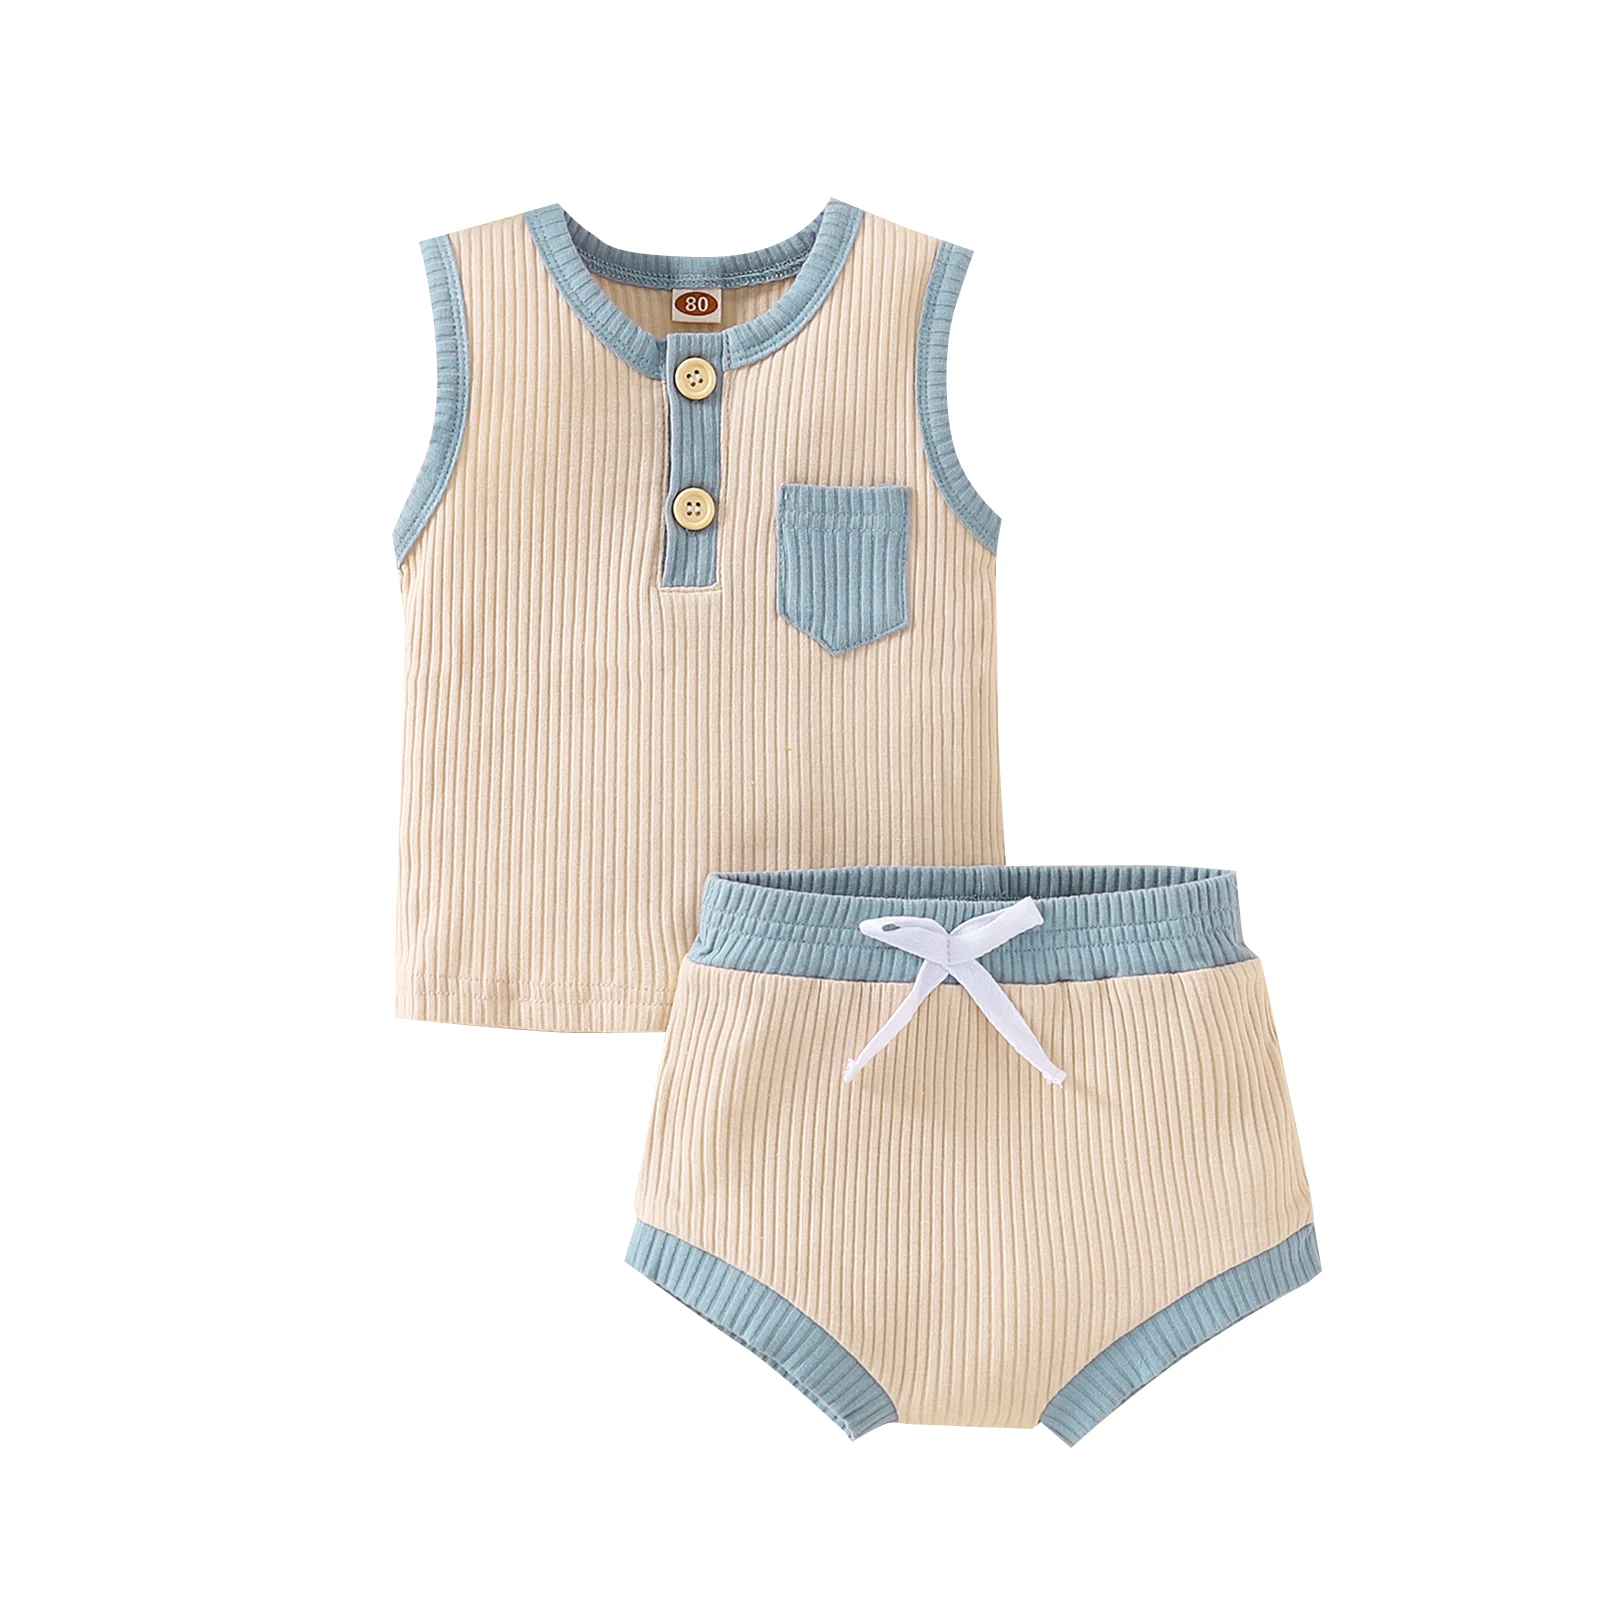 Baby Clothing Set best of sale Summer 2022 Infant Boys Girls Suit Sleeveless Pocket Patchwork Top Bandage Triangle Shorts 2pcs Baby Clothing baby outfit matching set